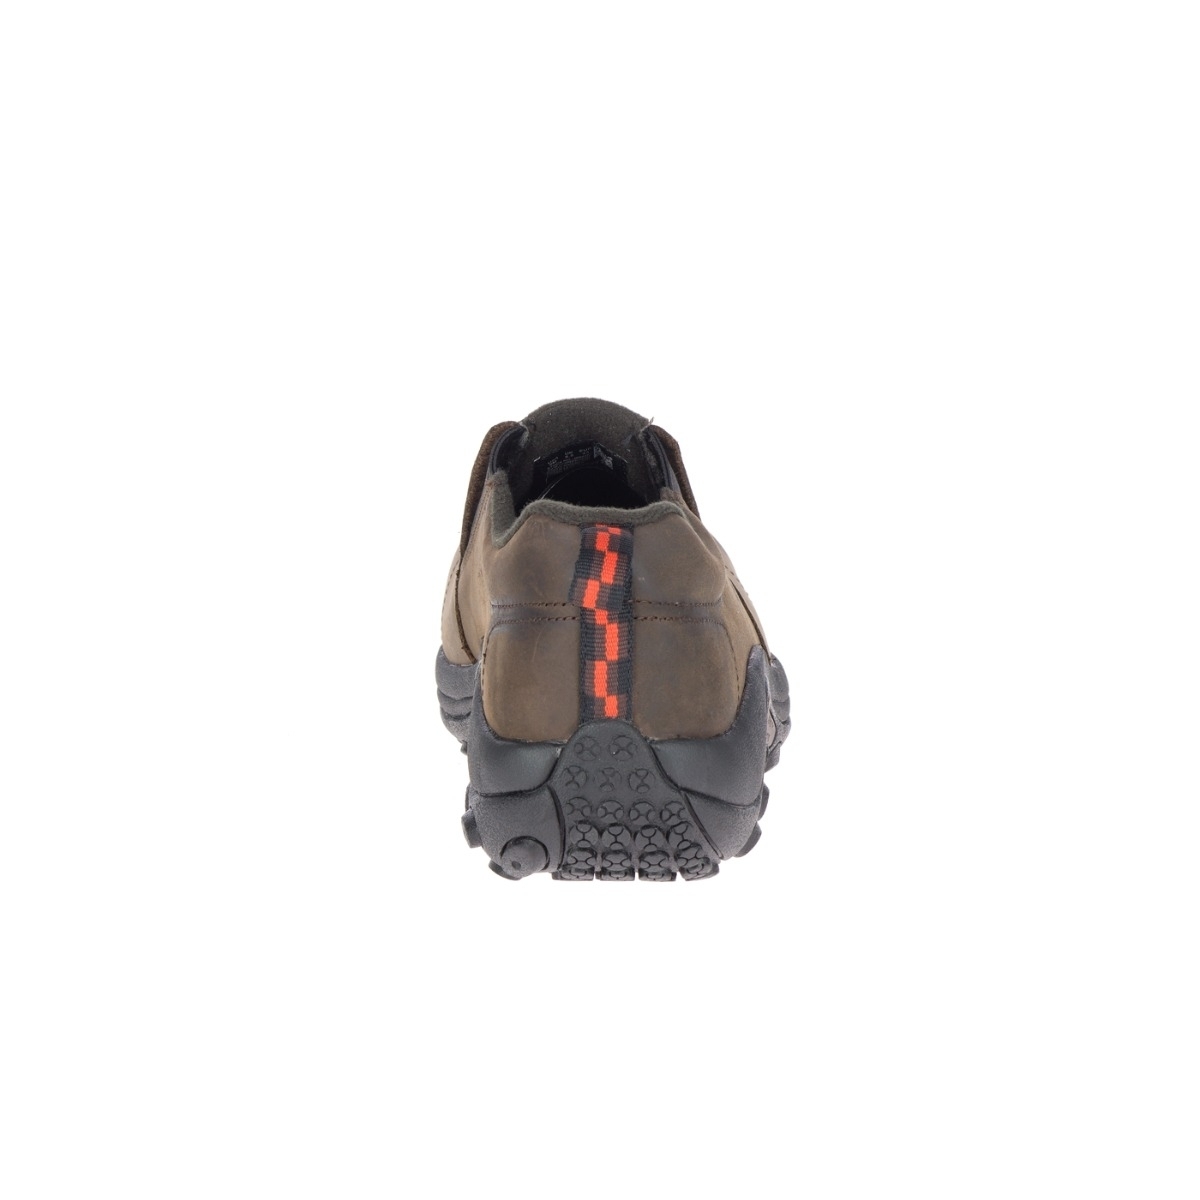 MERRELL WORK Men's Jungle Moc Leather Composite Toe SD+ Work Shoe Espresso - J099381 ESPRESSO - ESPRESSO, 9.5-M